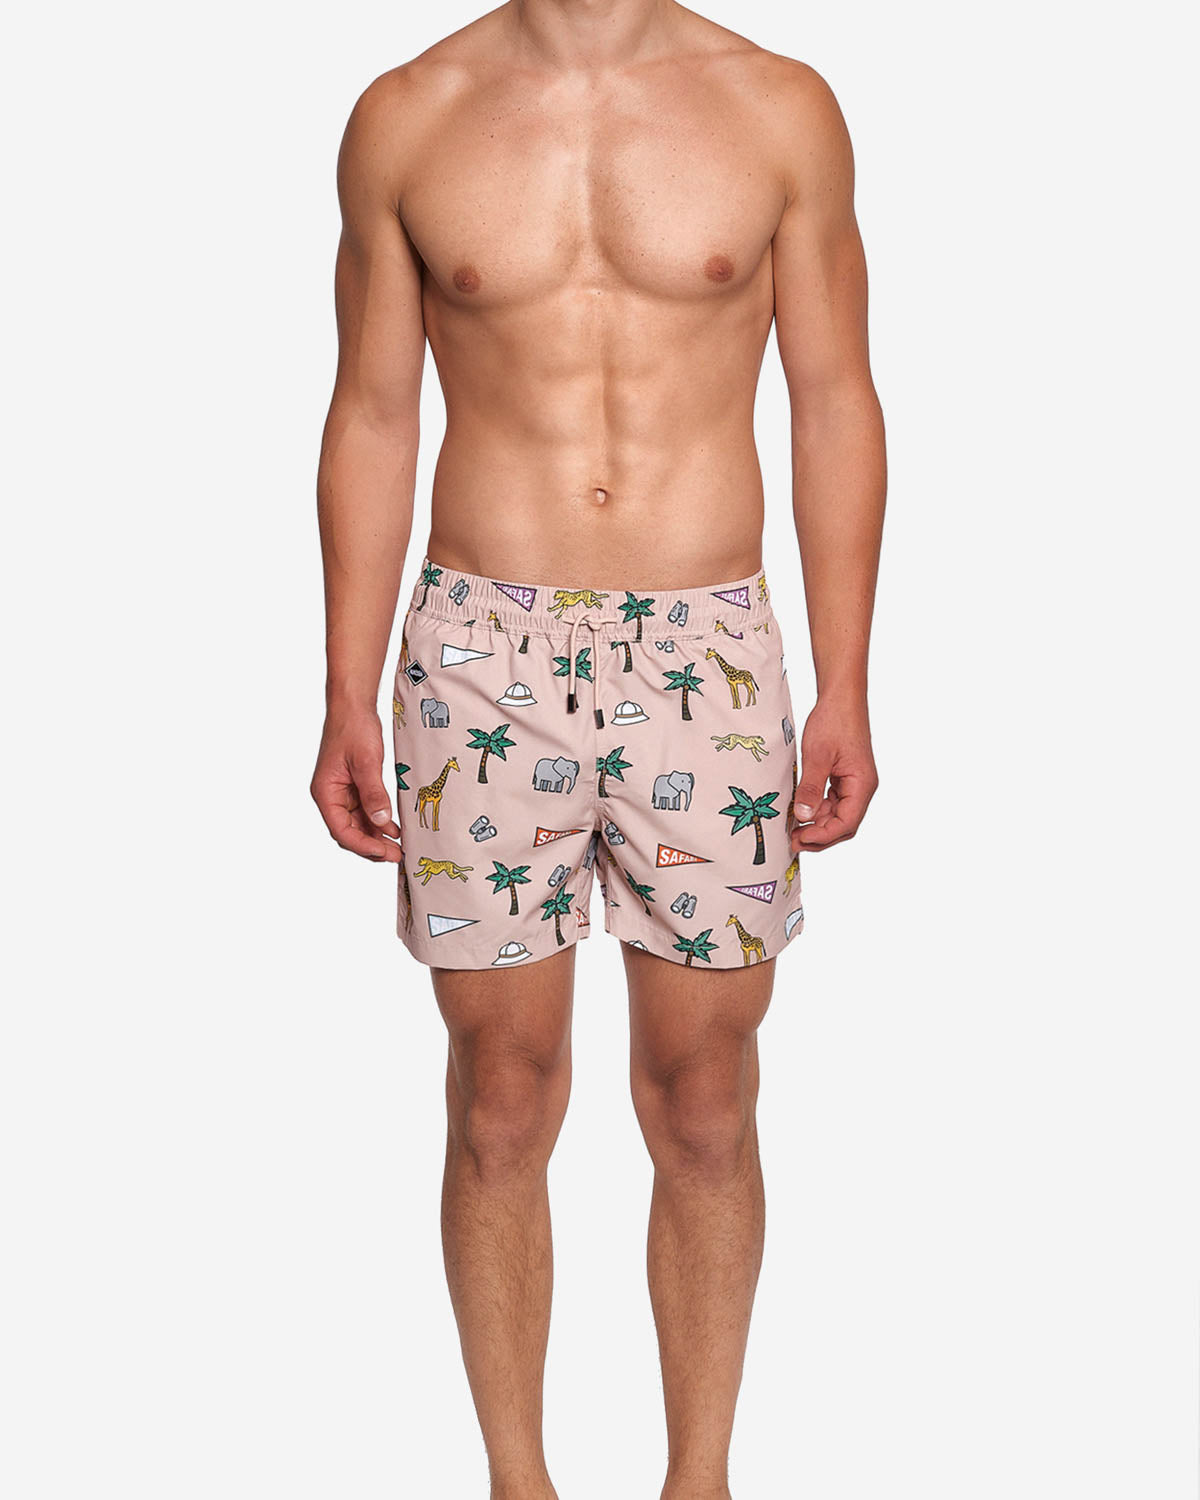 Model wearing beige swim trunks with multicolored safari print